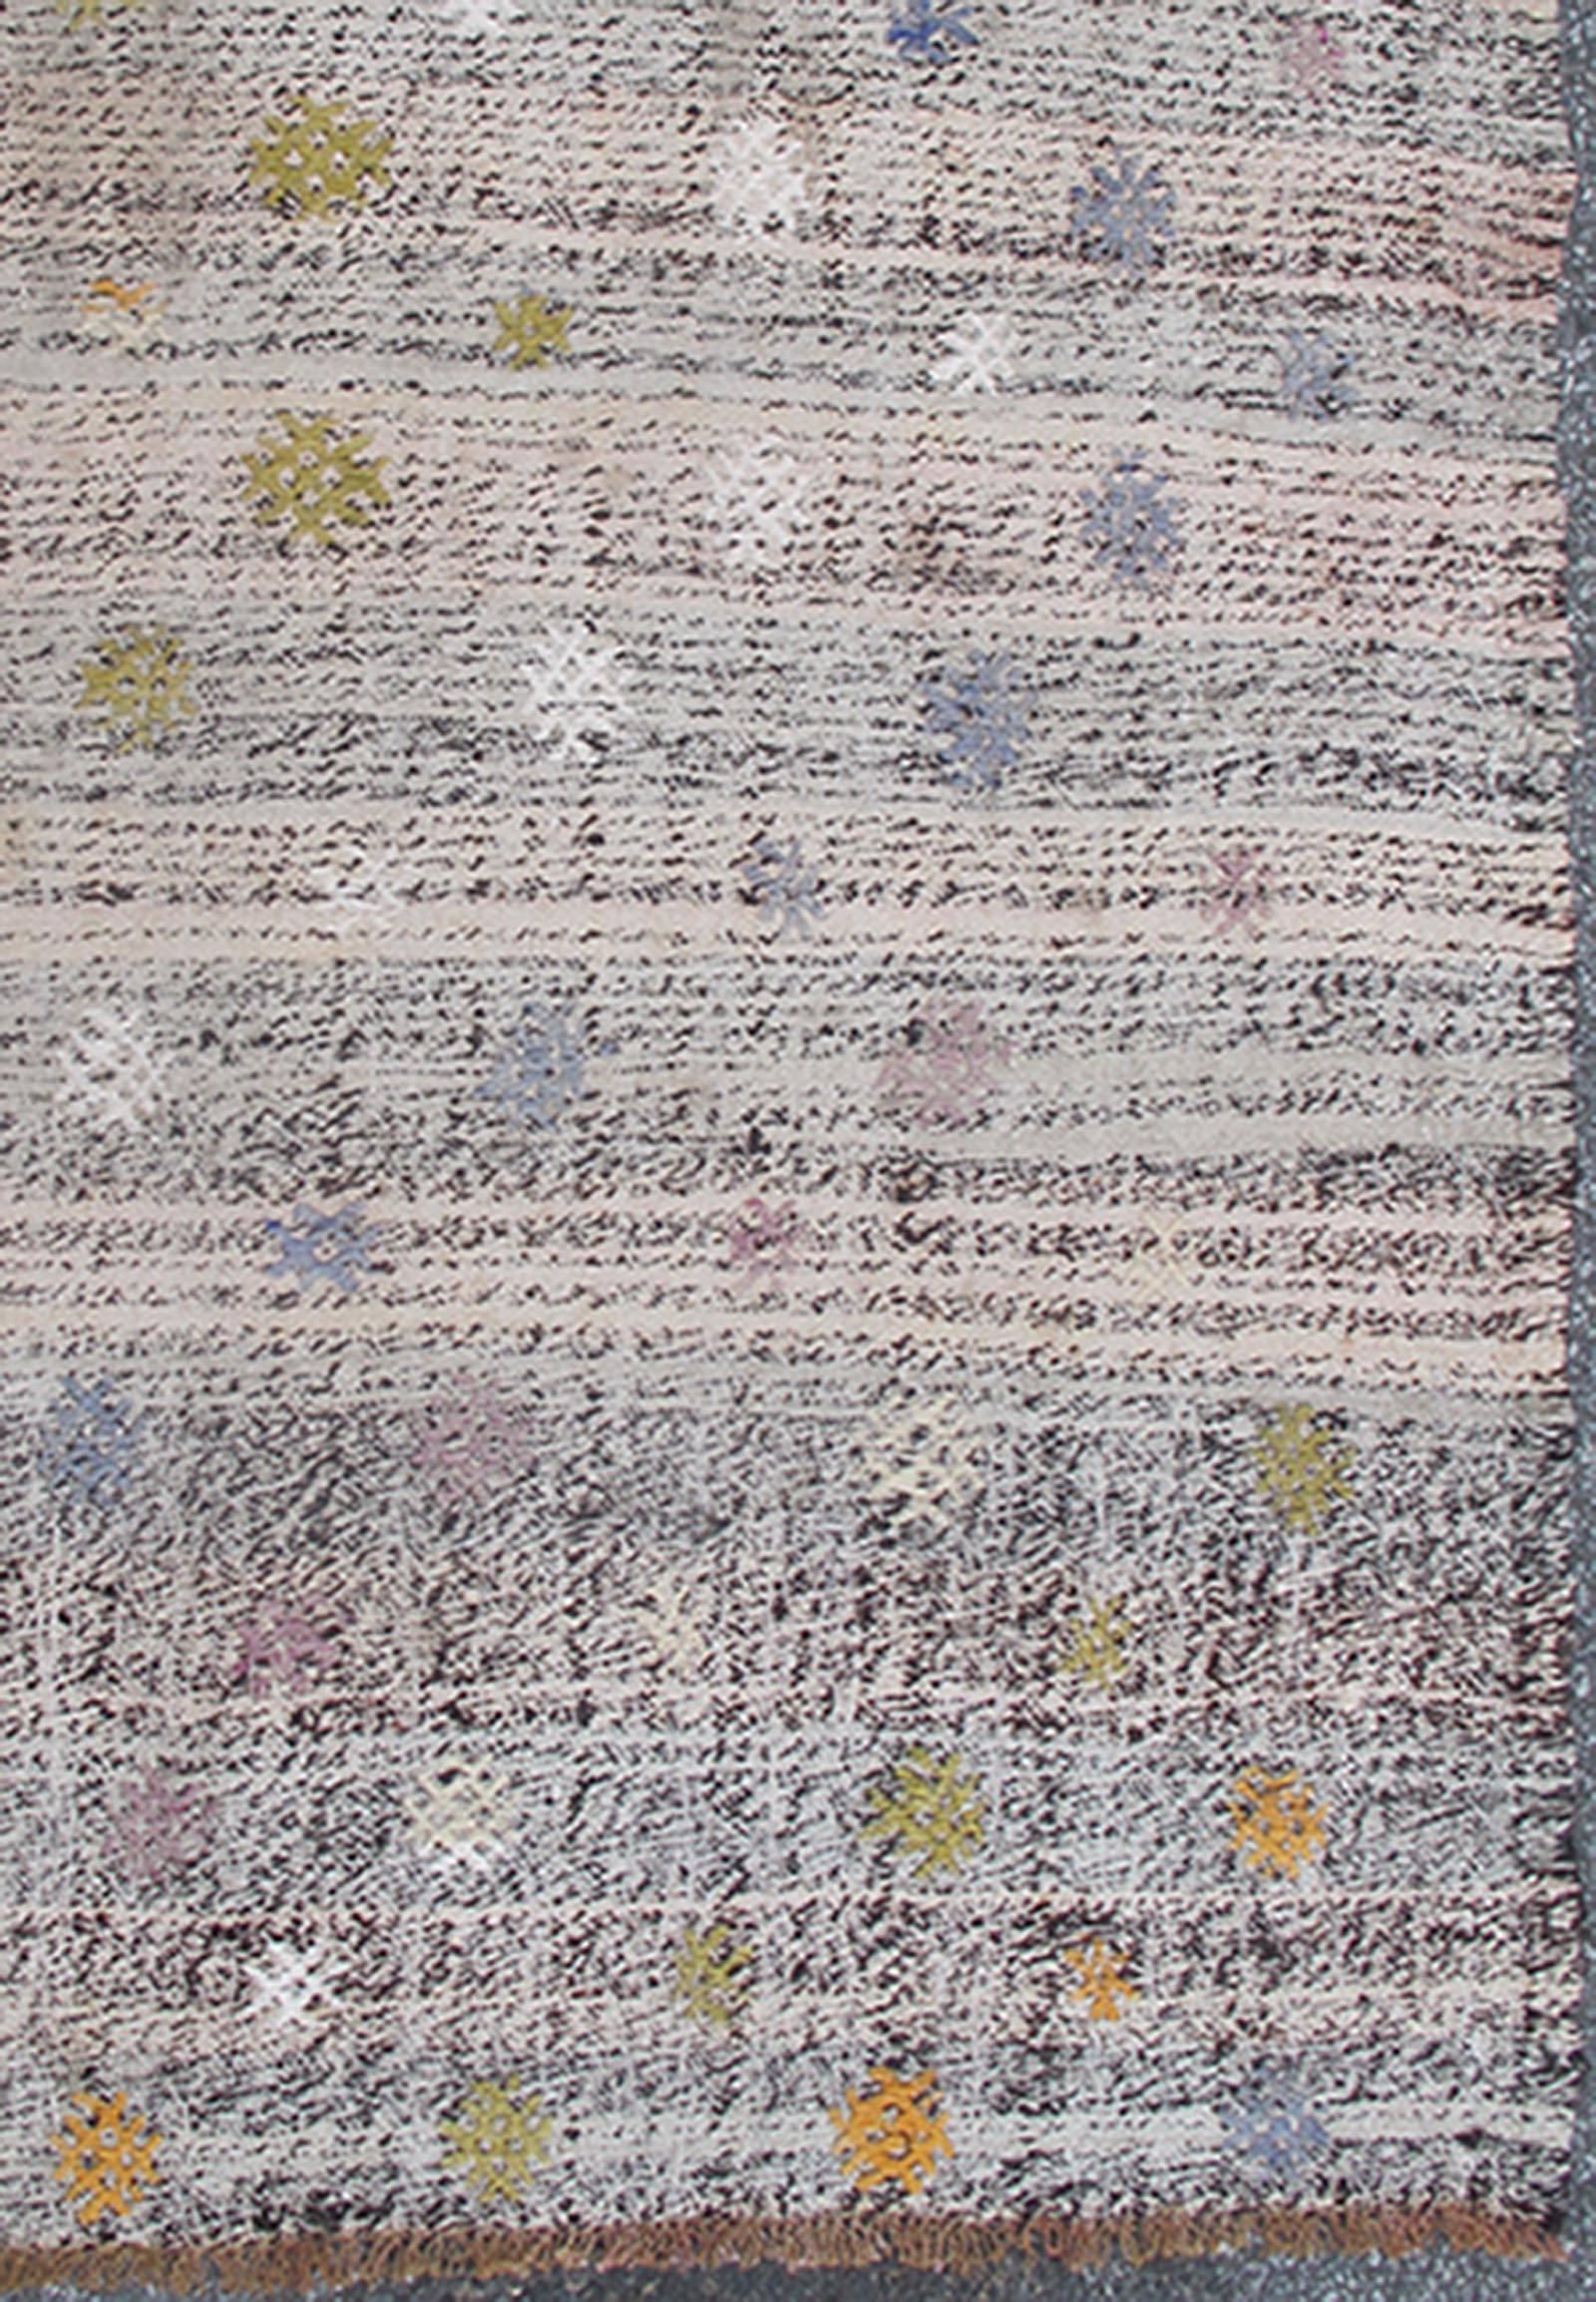 Vintage Turkish Kilim rug with striped background, colorful diamond pattern, rug emd-136528, country of origin / type: Turkey / Kilim, circa mid-20th century

This vintage Kilim (circa mid-20th century) has a large-scale, all-over diamond pattern